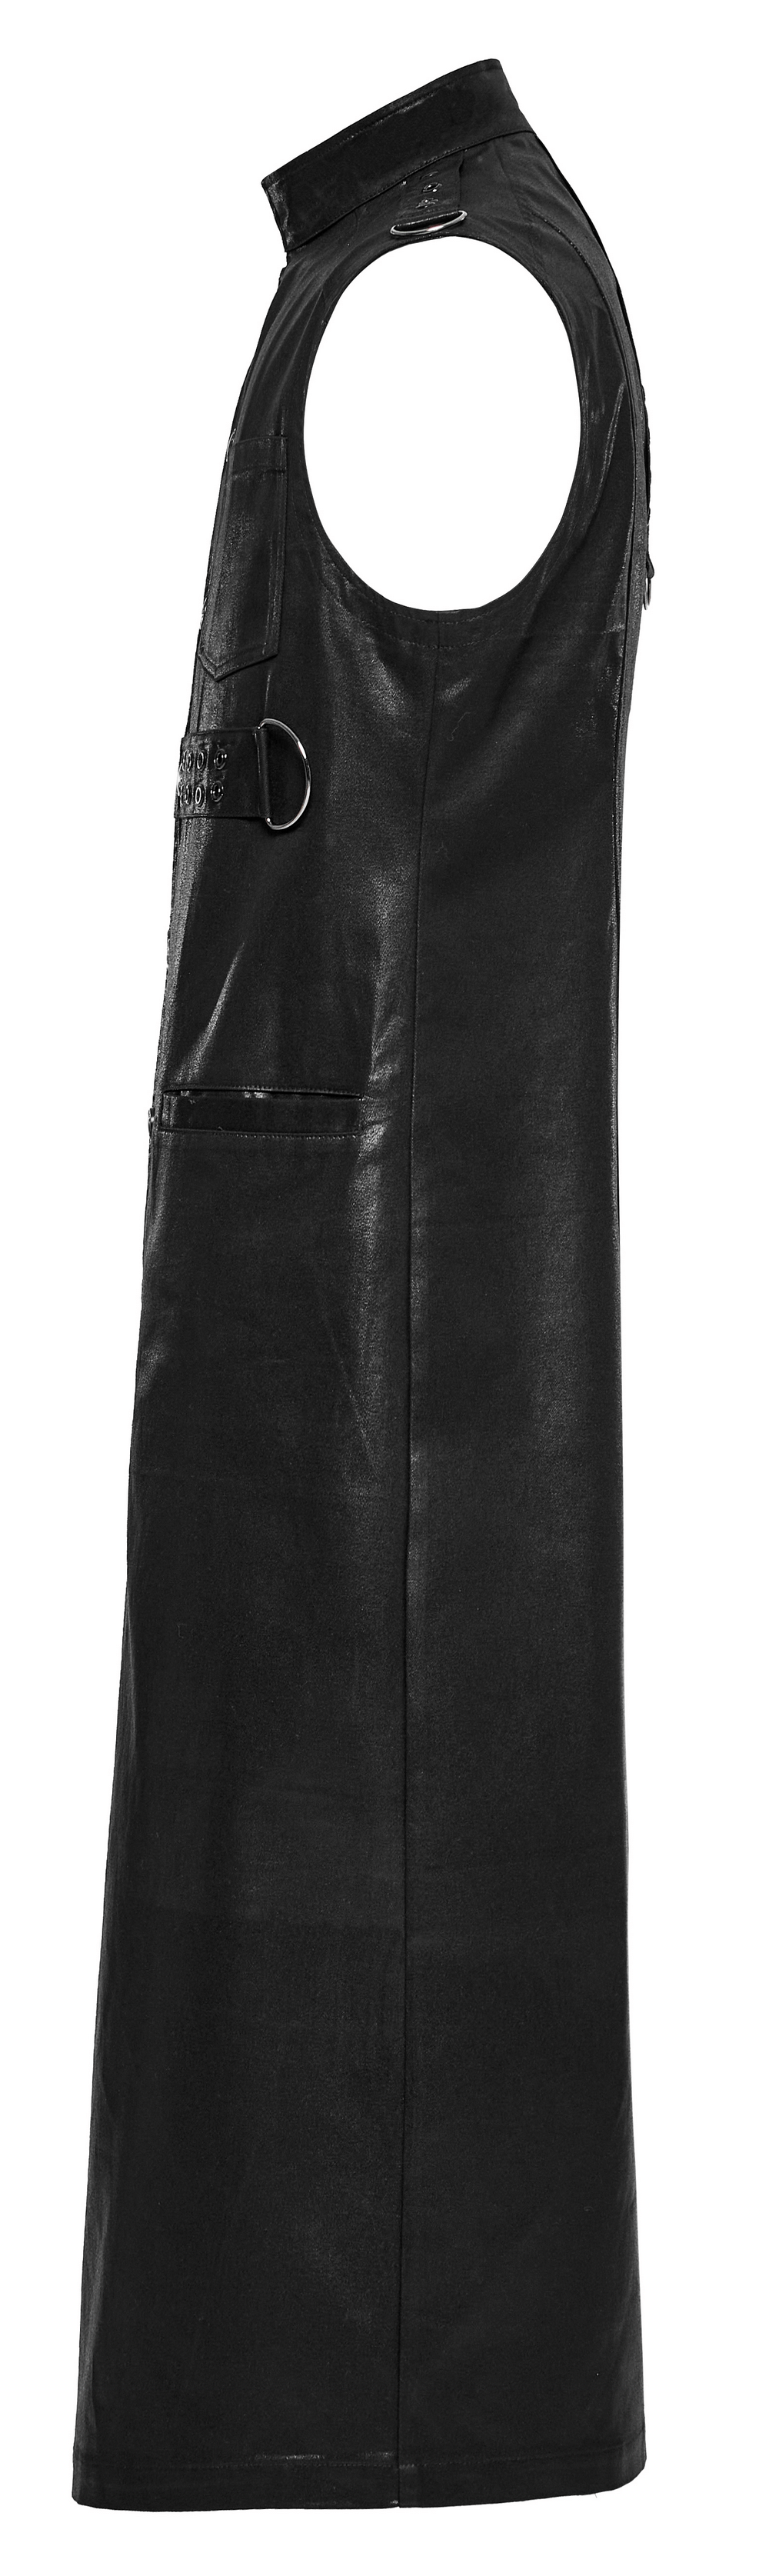 Men's Leather Punk Style Long Vest with Straps